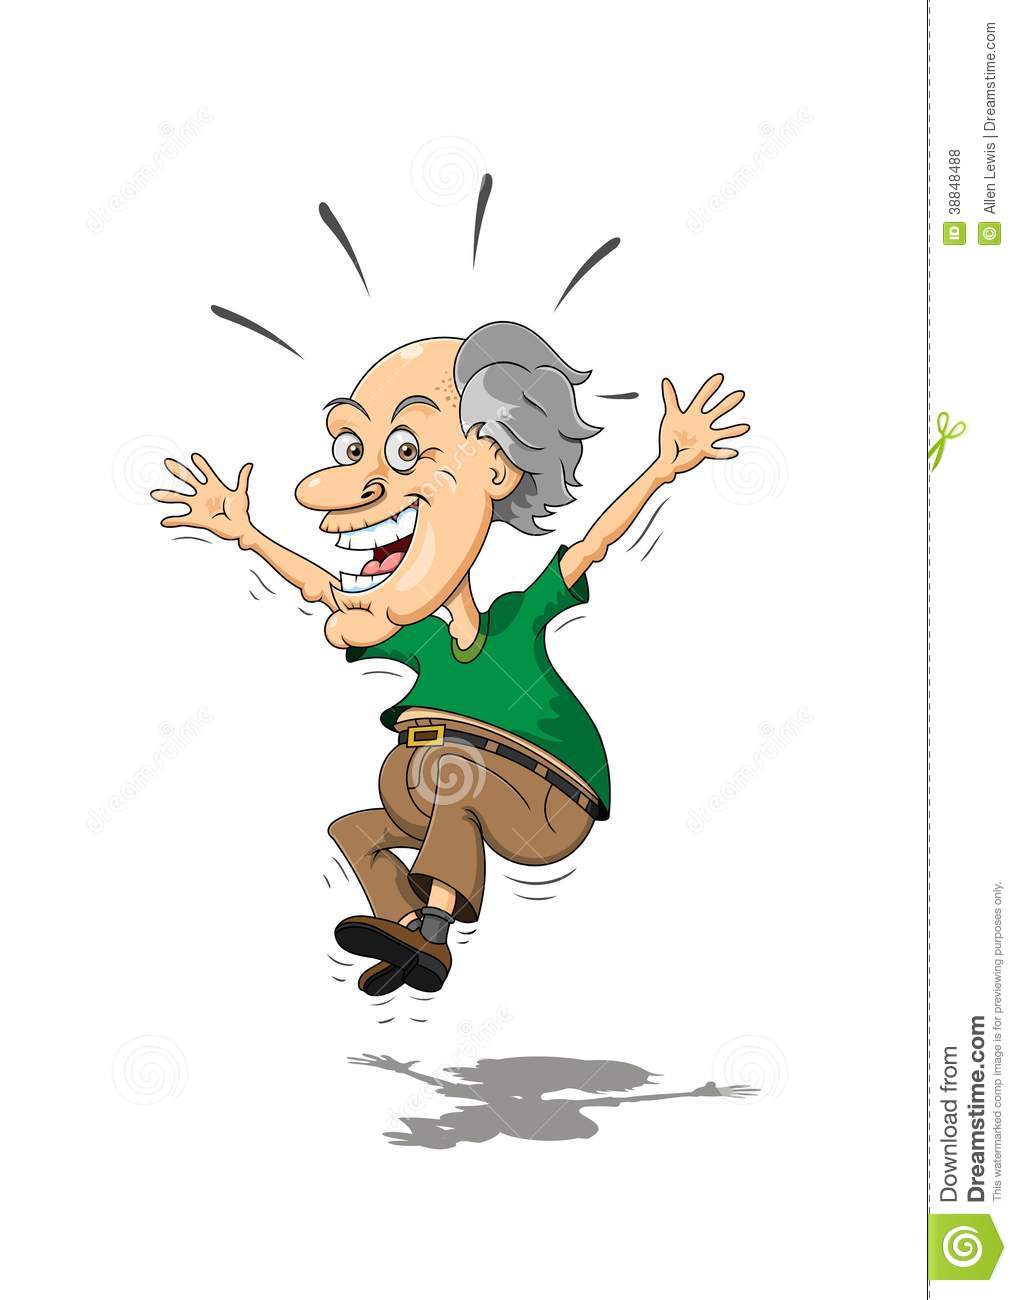 Elderly Man Jumping For Joy Stock Illustration   Image  38848488